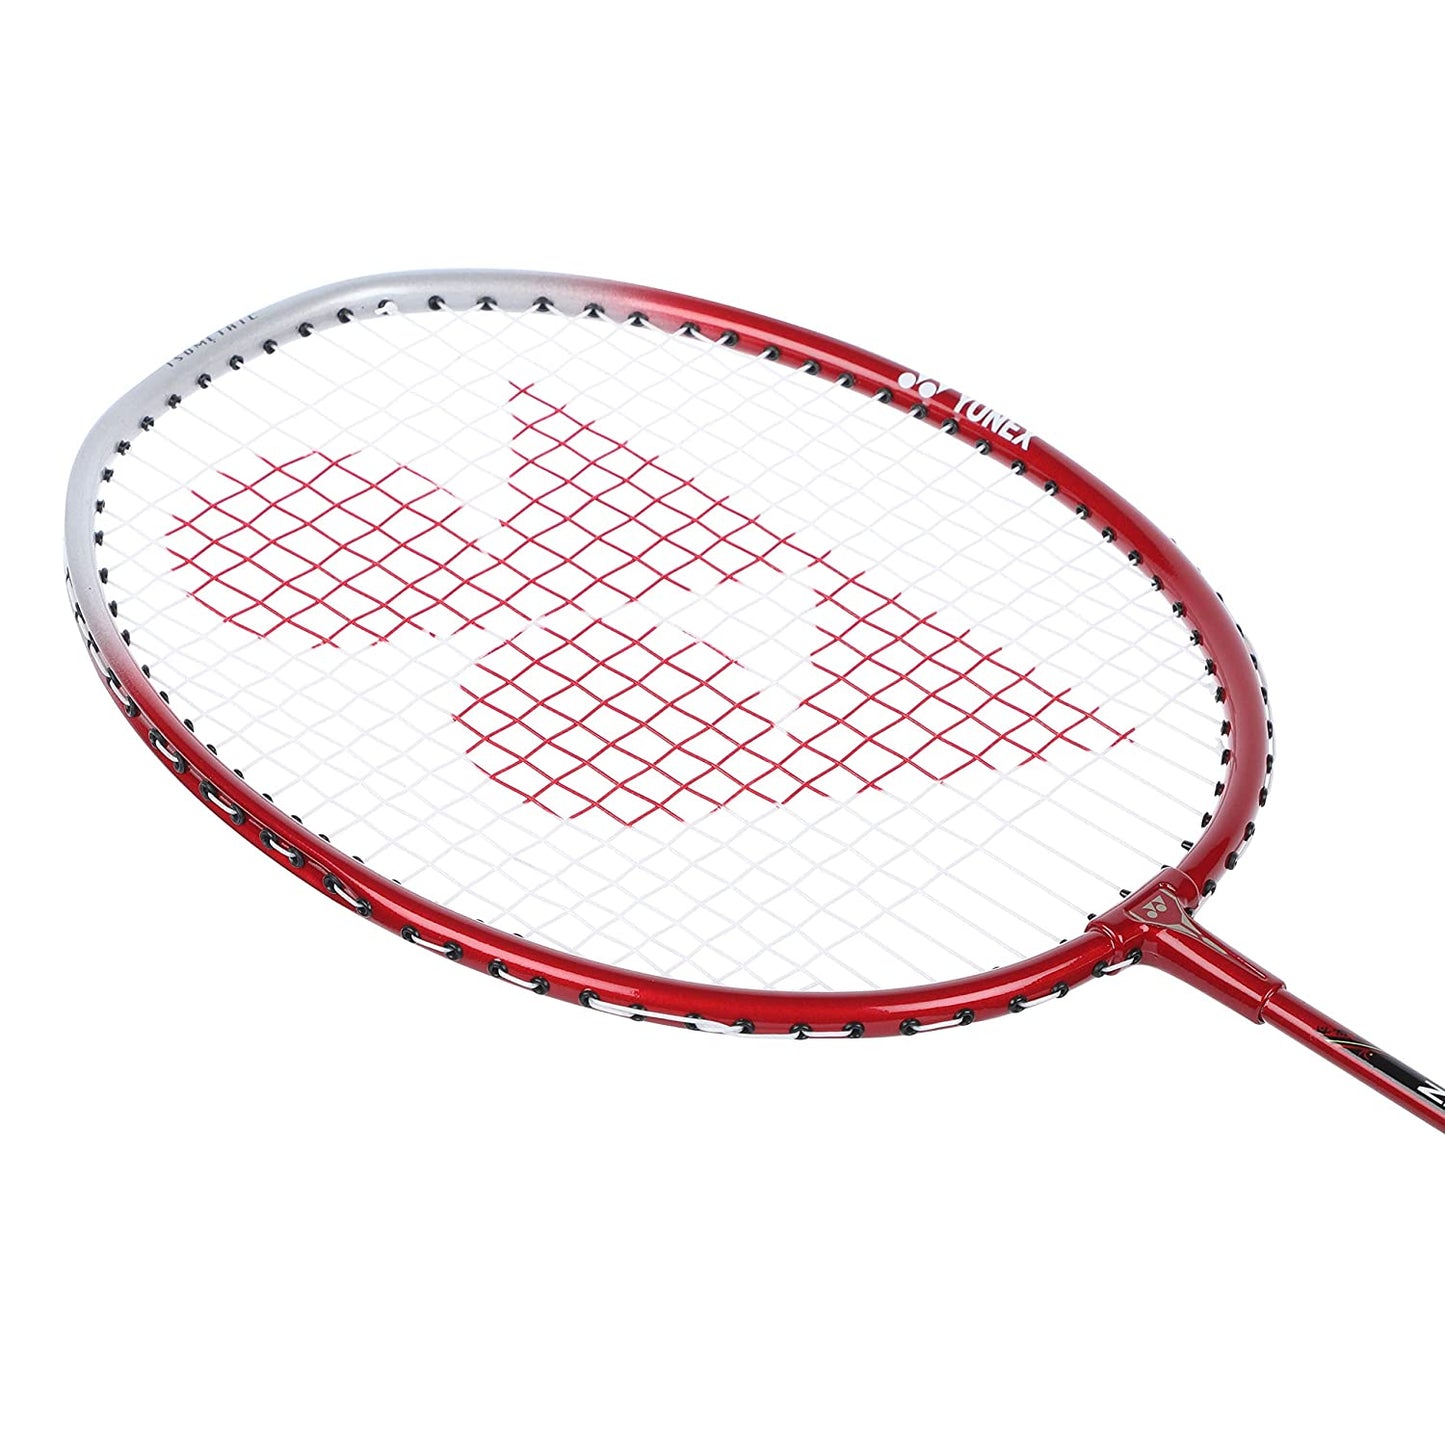 Yonex ZR 101 Aluminium Strung Badminton Racquet with Full Cover Red - Best Price online Prokicksports.com